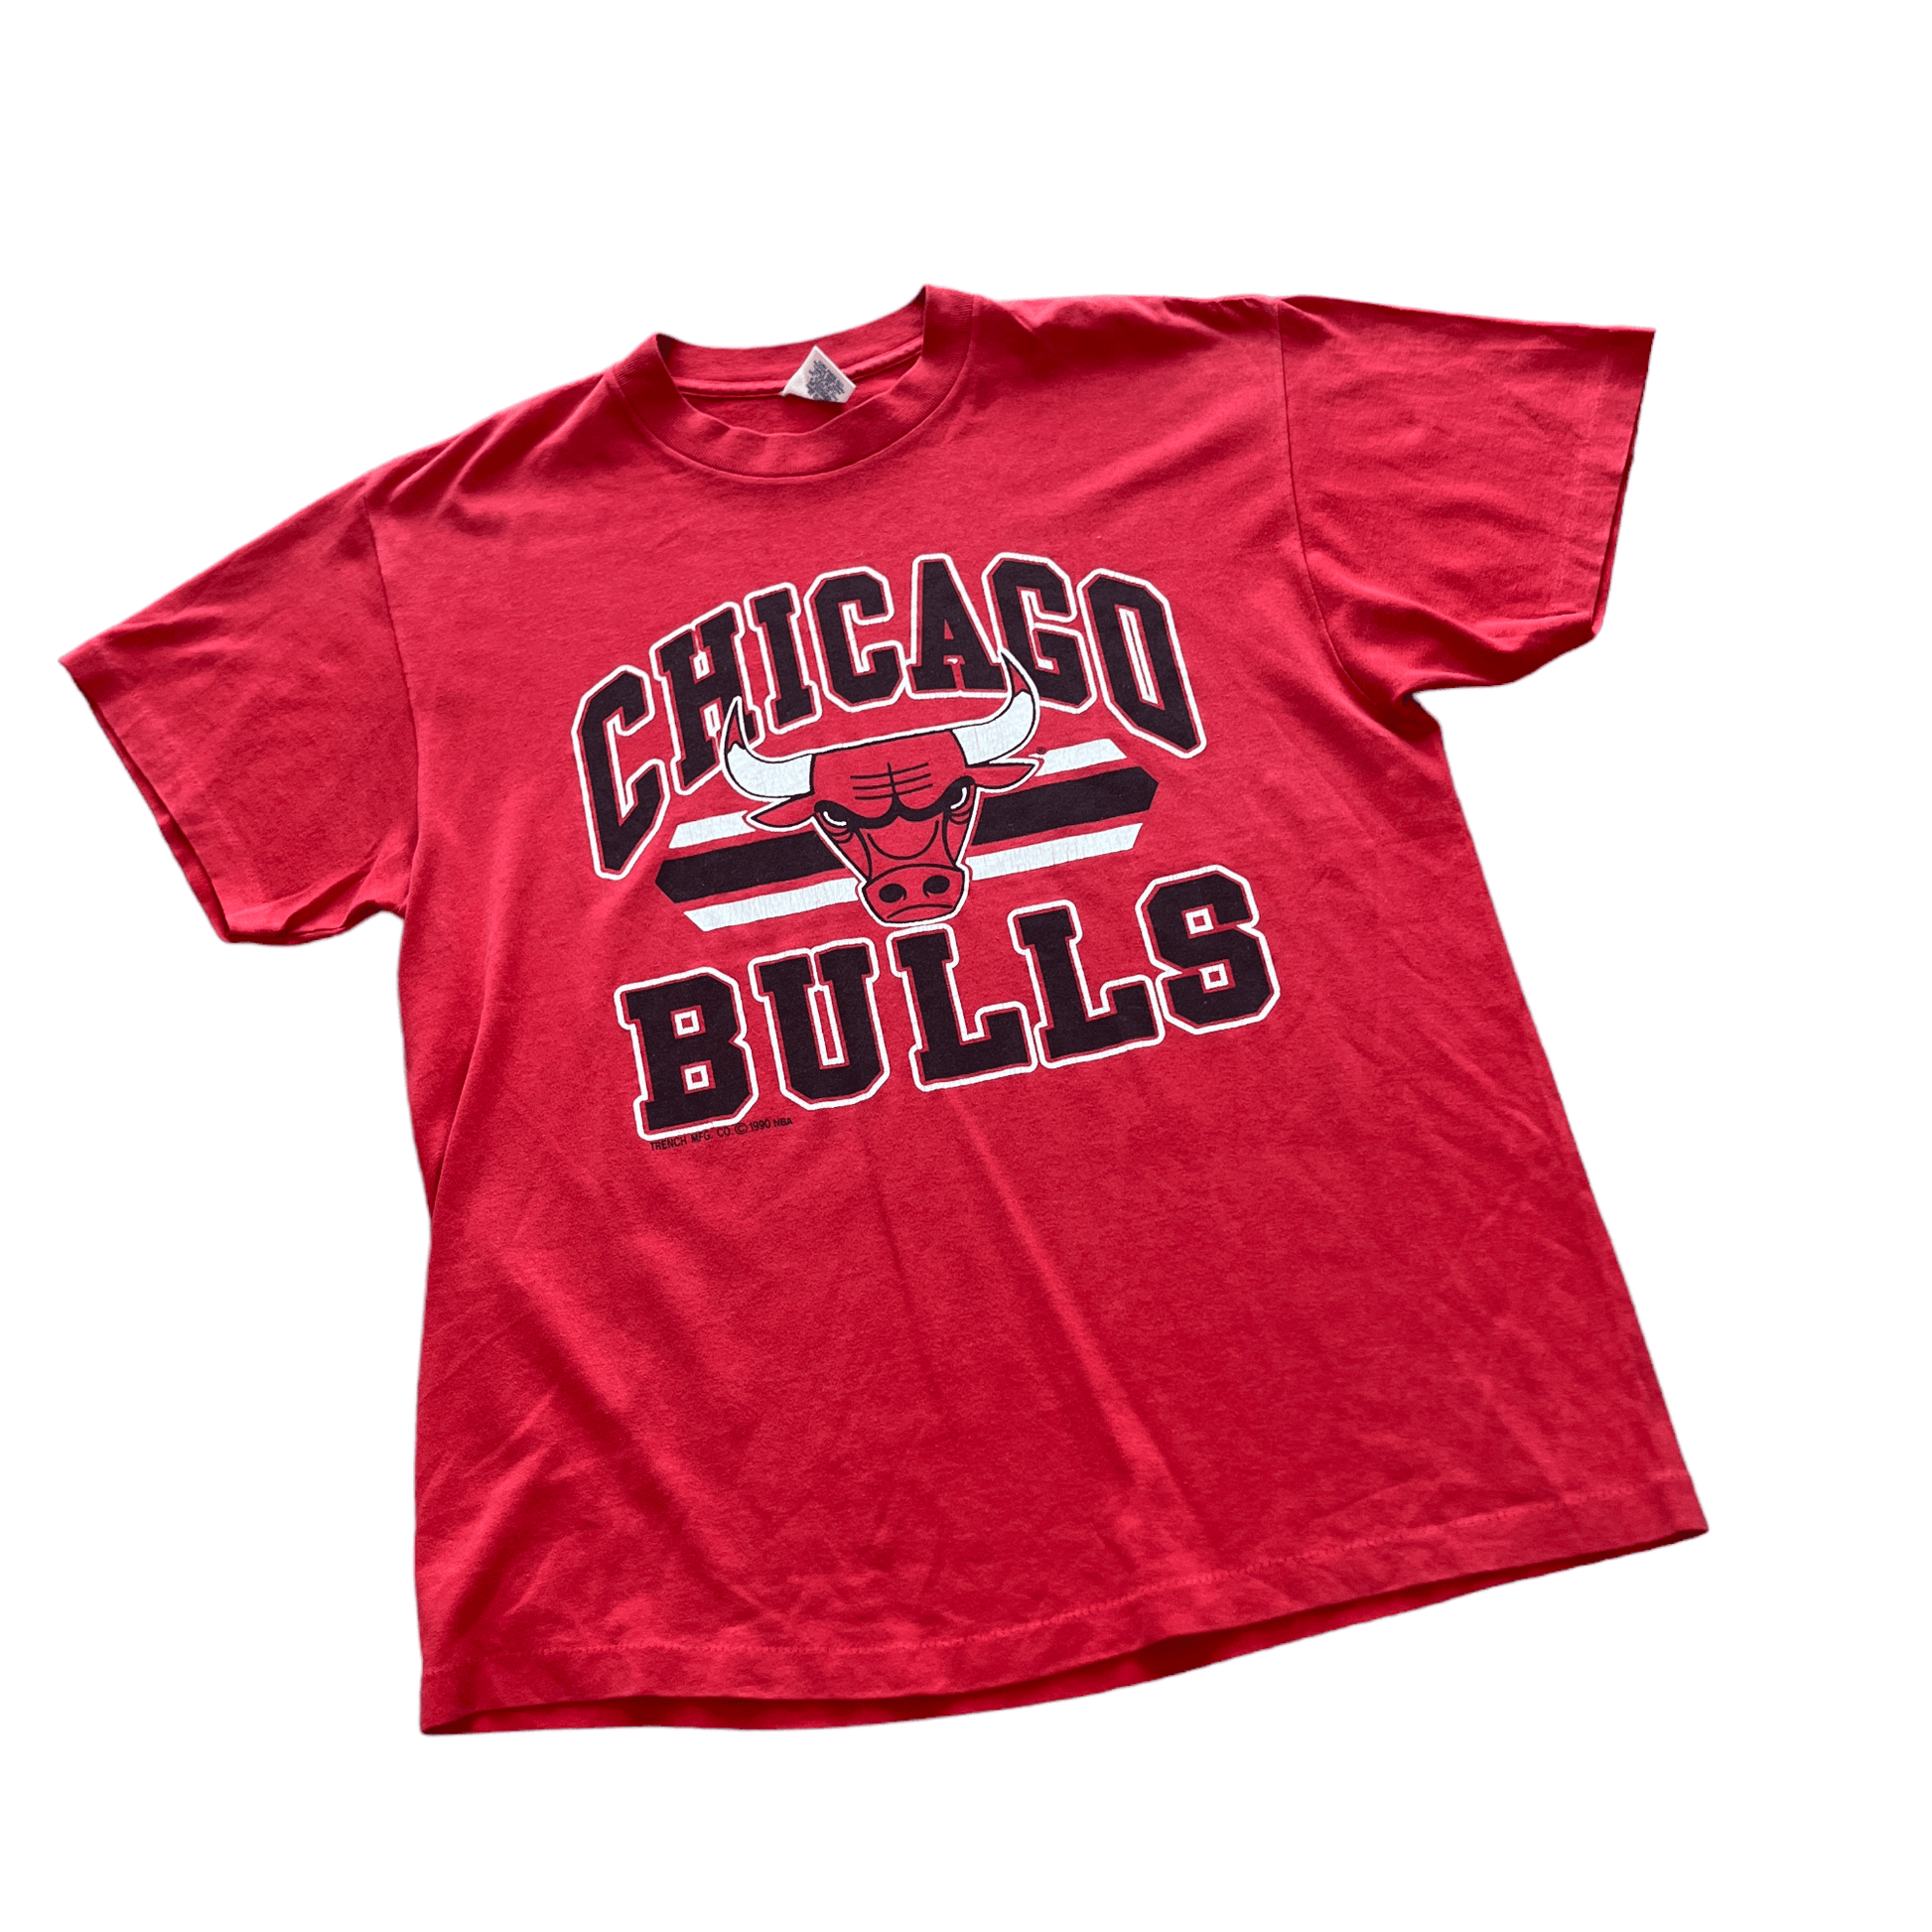 Vintage 90s Red NBA Chicago Bulls Tee - Large - The Streetwear Studio